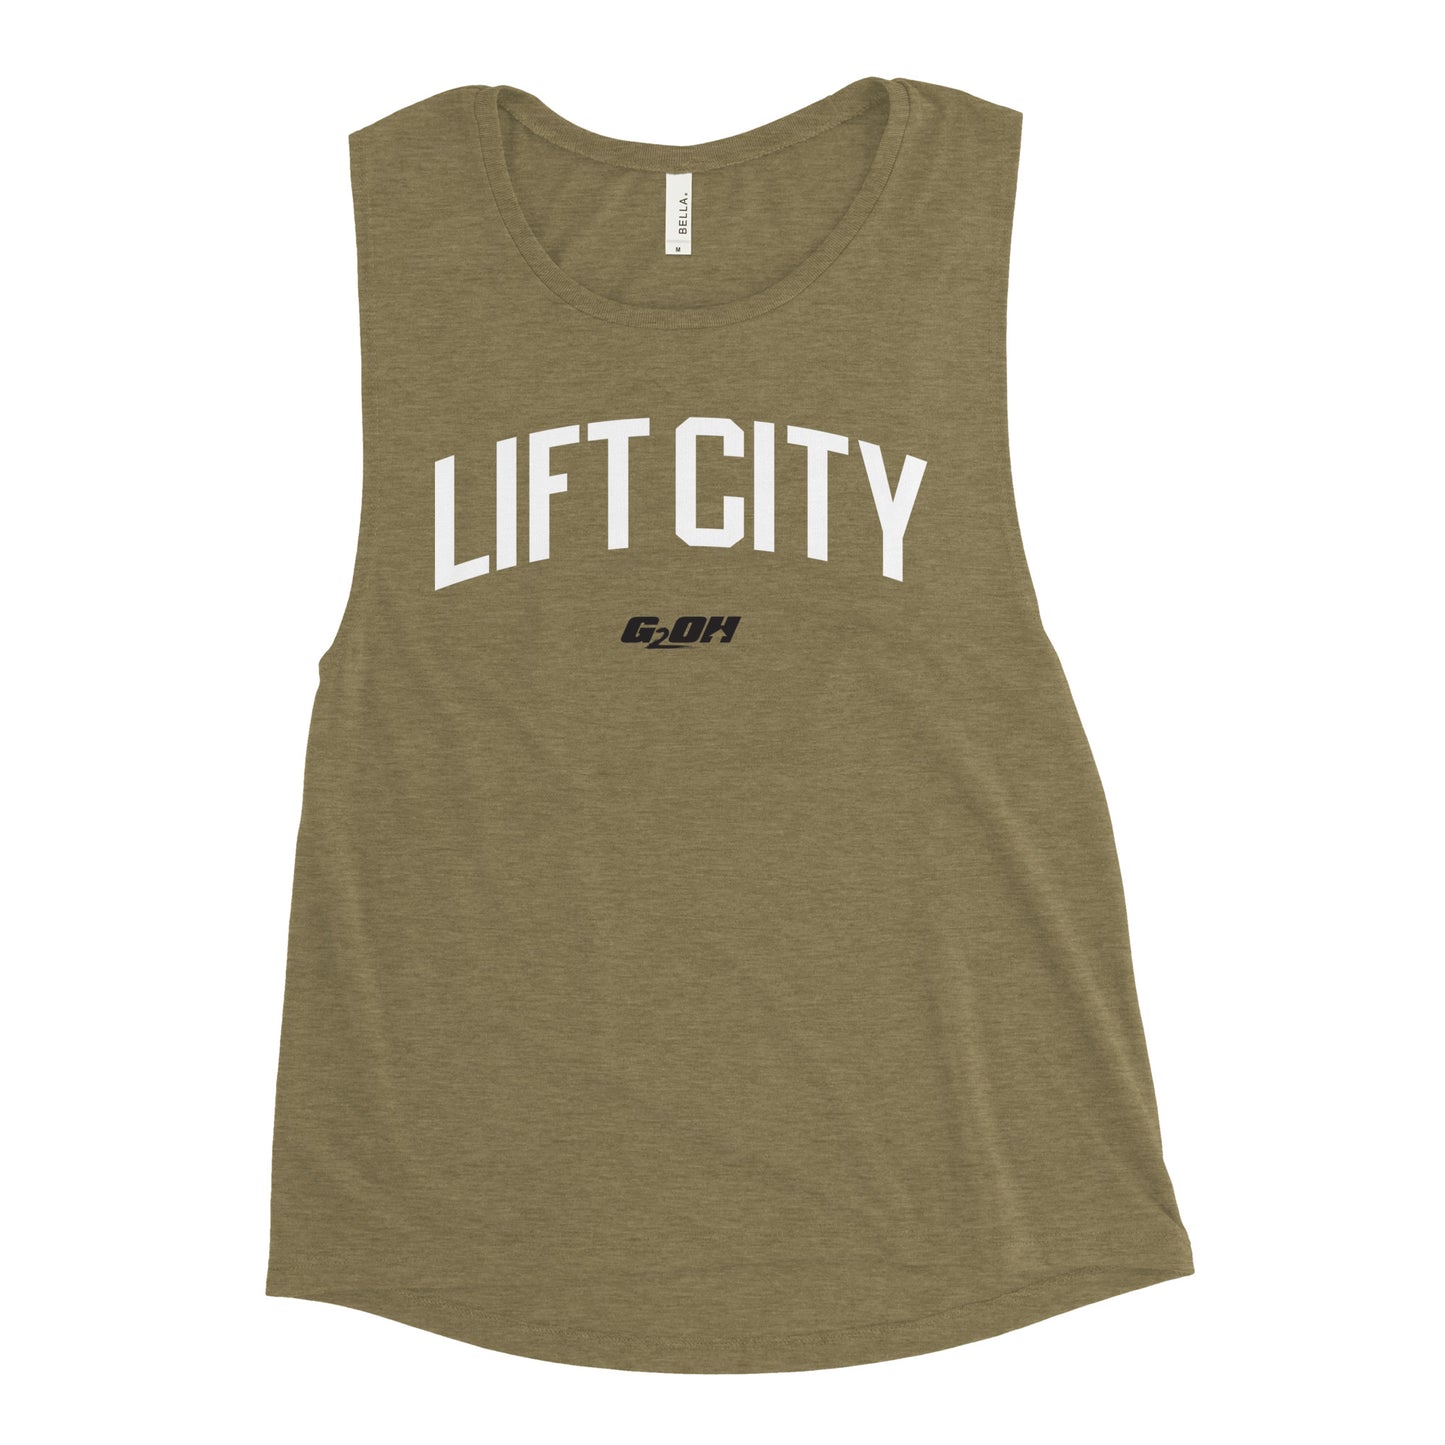 Lift City Women's Muscle Tank